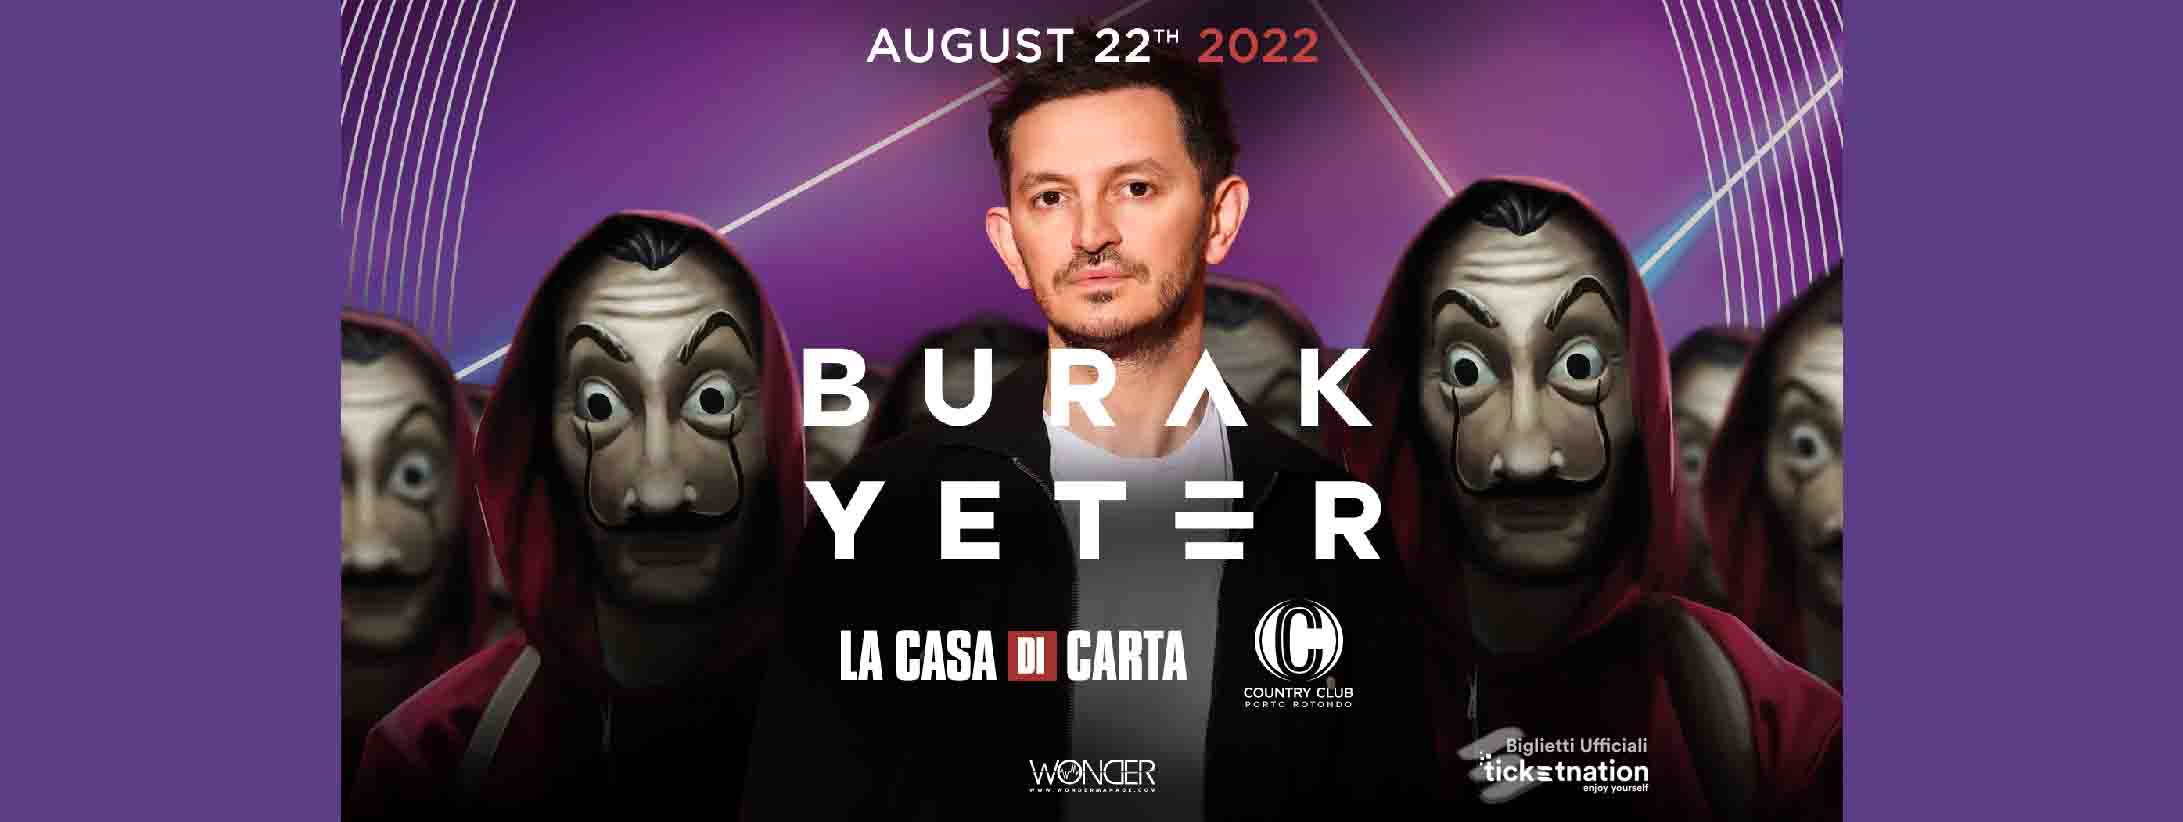 barak-yeter-country-club-portorotondo-22-agosto-2022